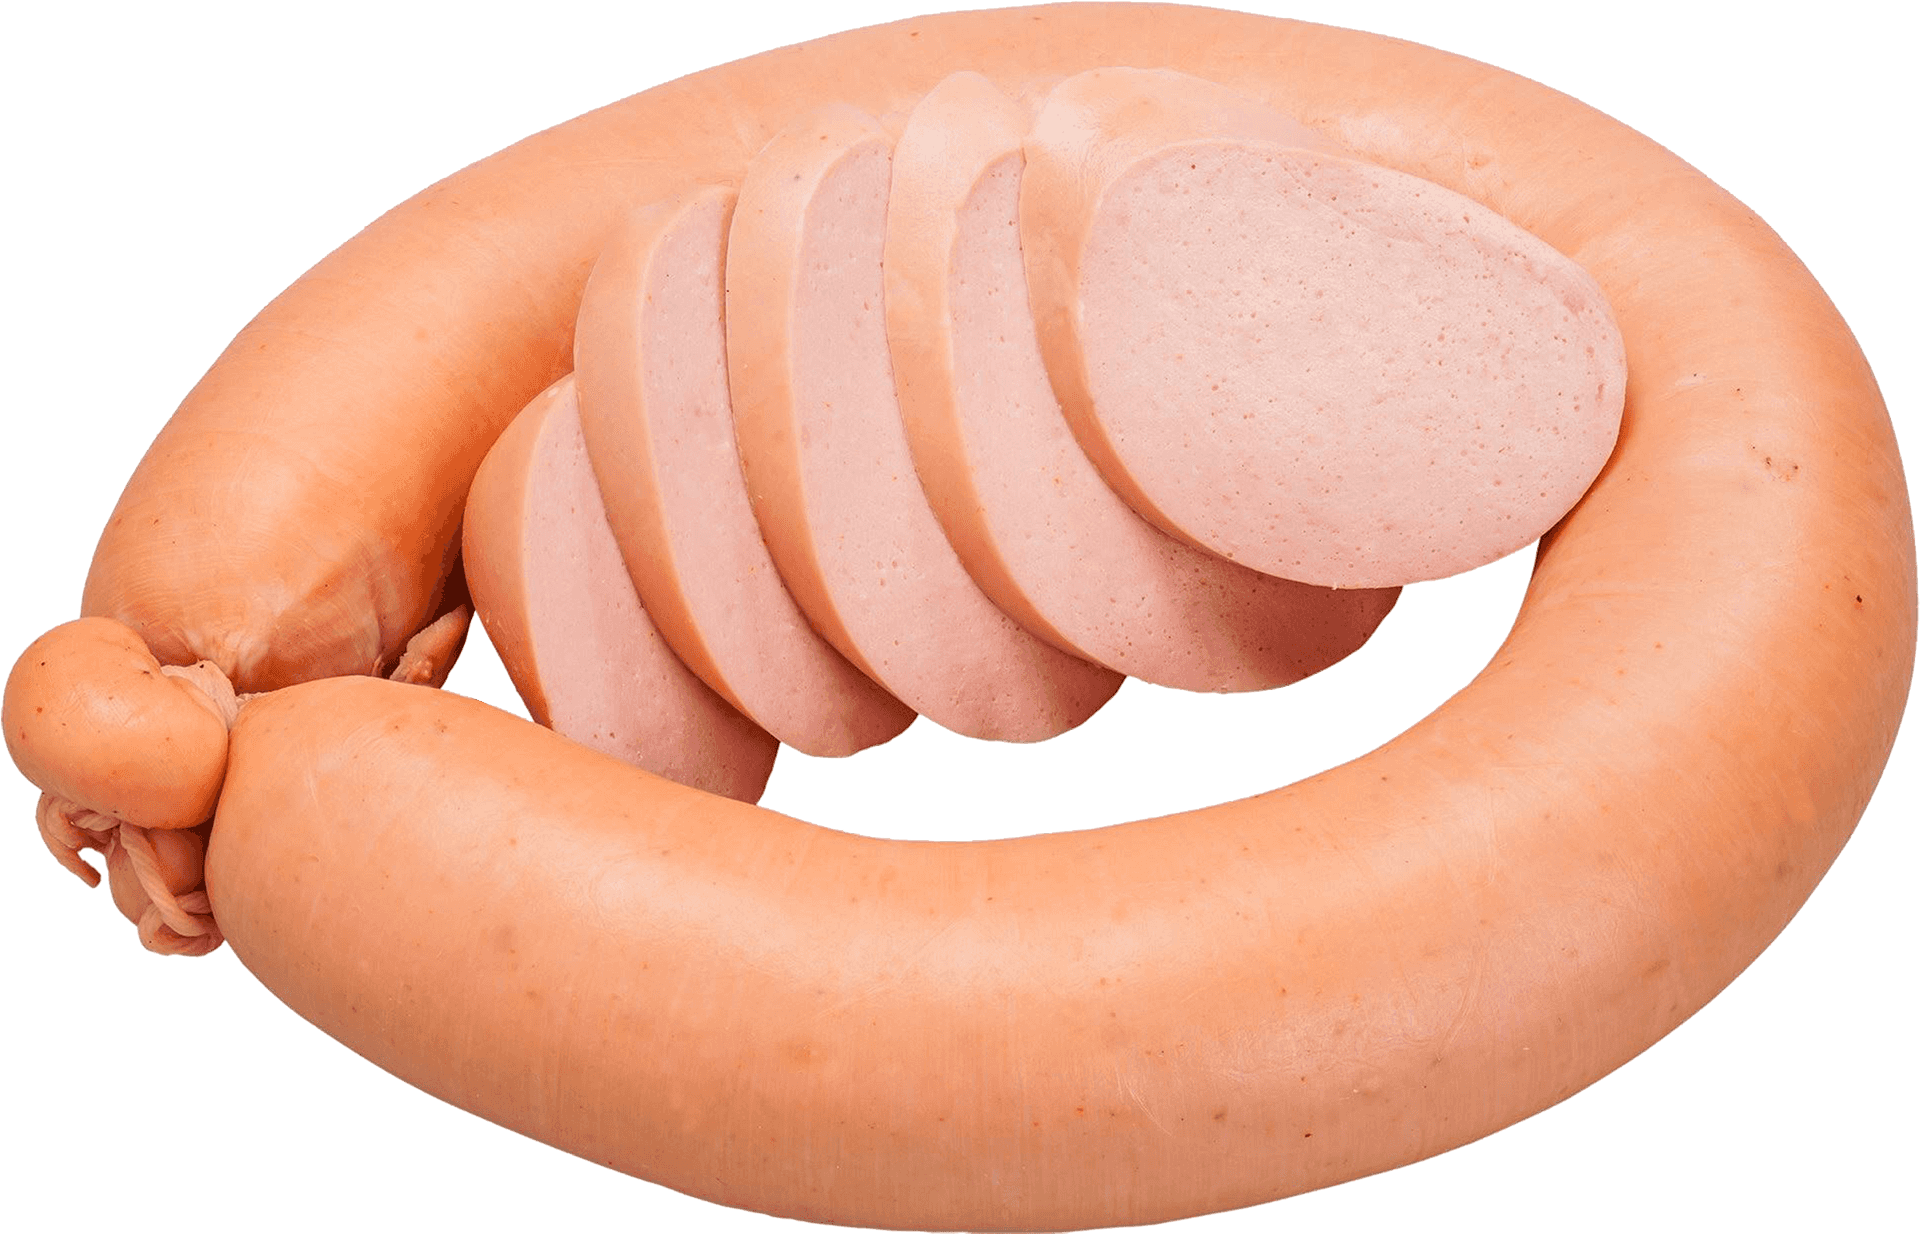 Sausage Png